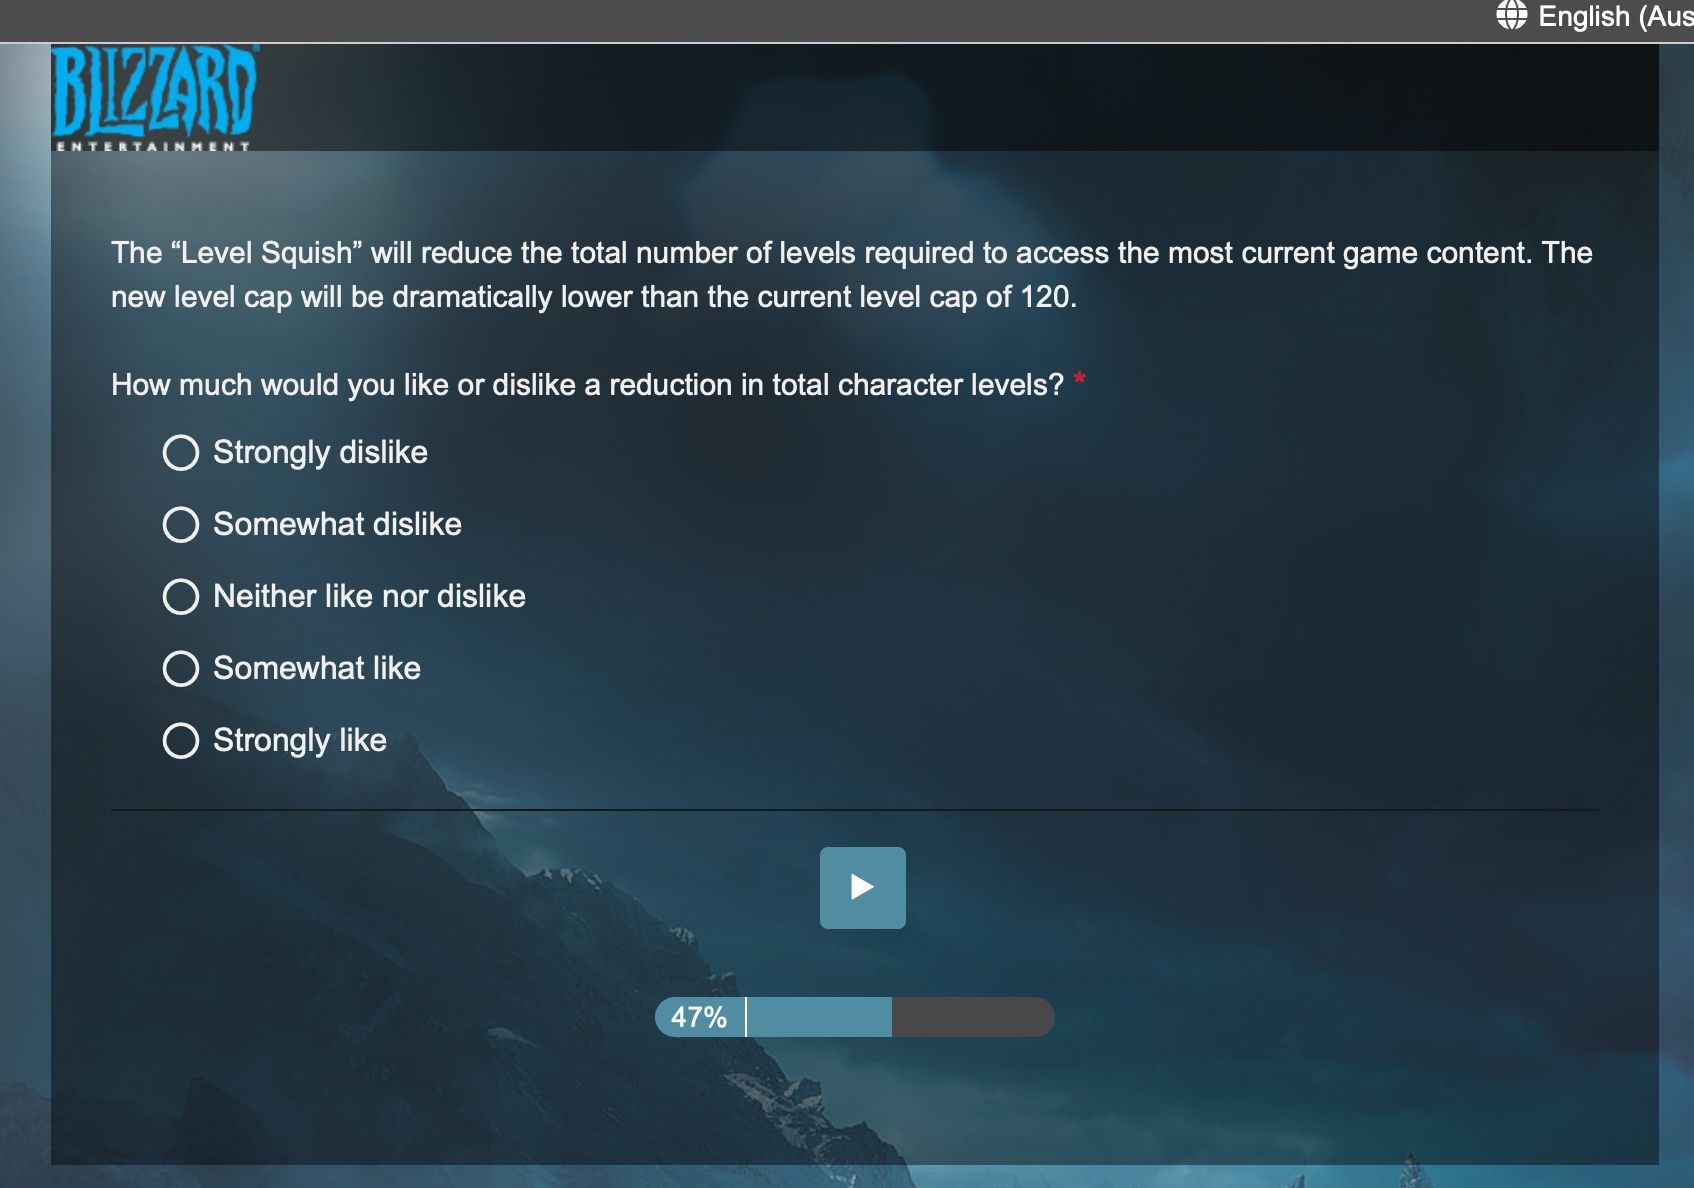 Blizzard WoW Survey